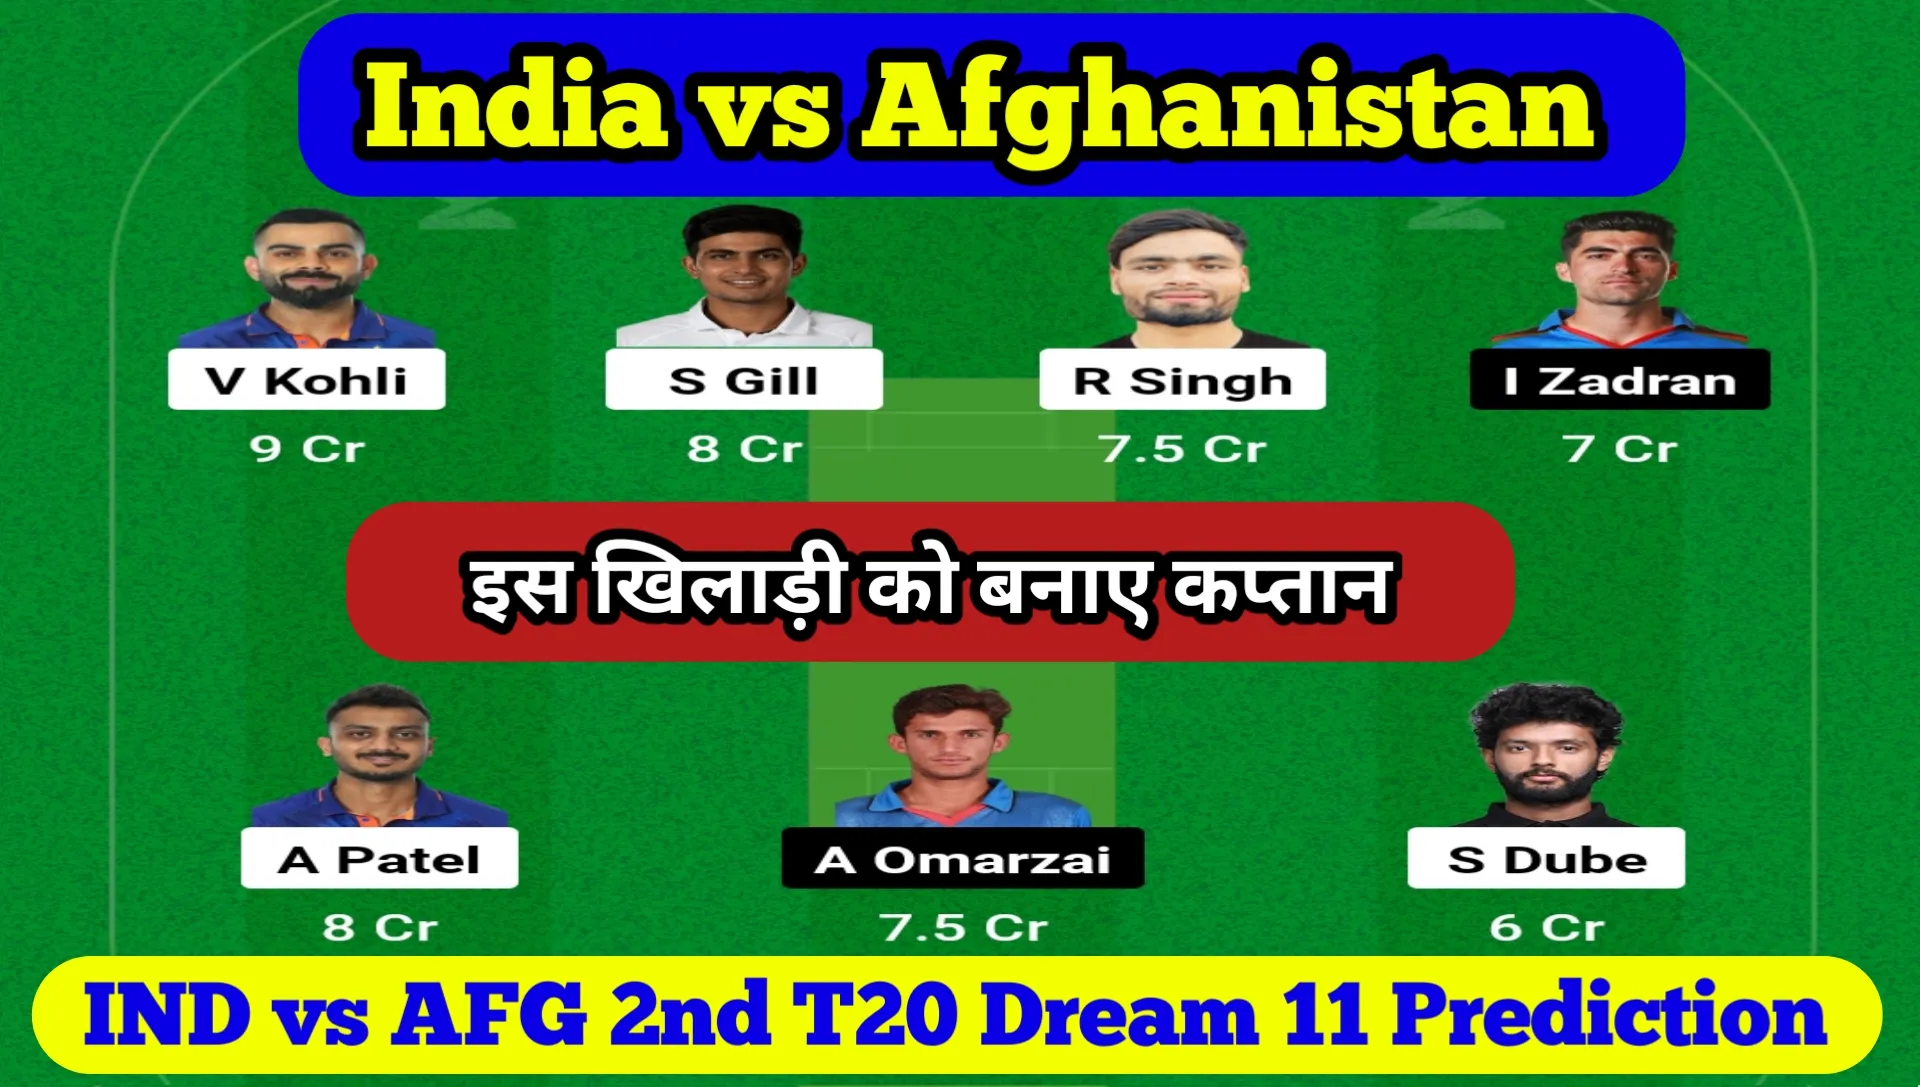 IND vs AFG 2nd T20 Dream 11 Prediction